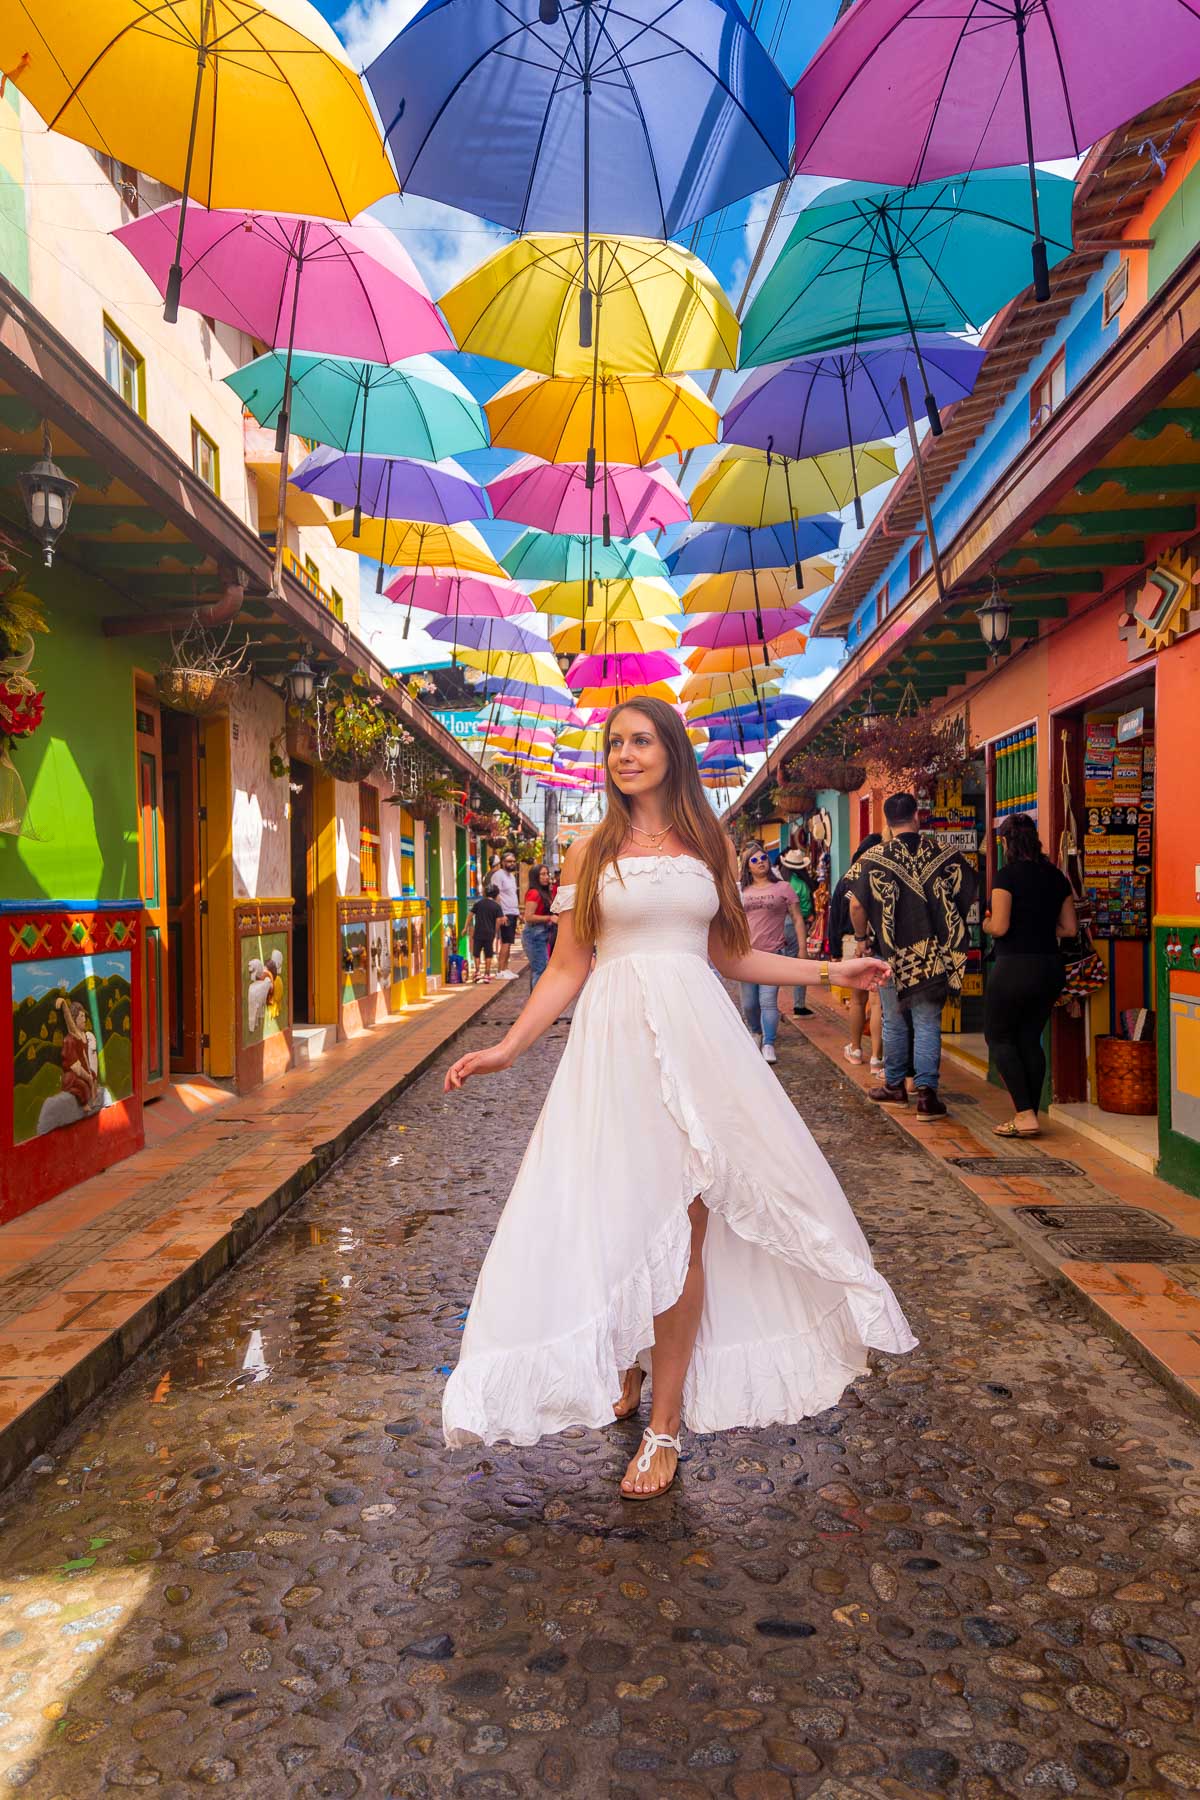 Girl in the Umbrella Street in Guatape